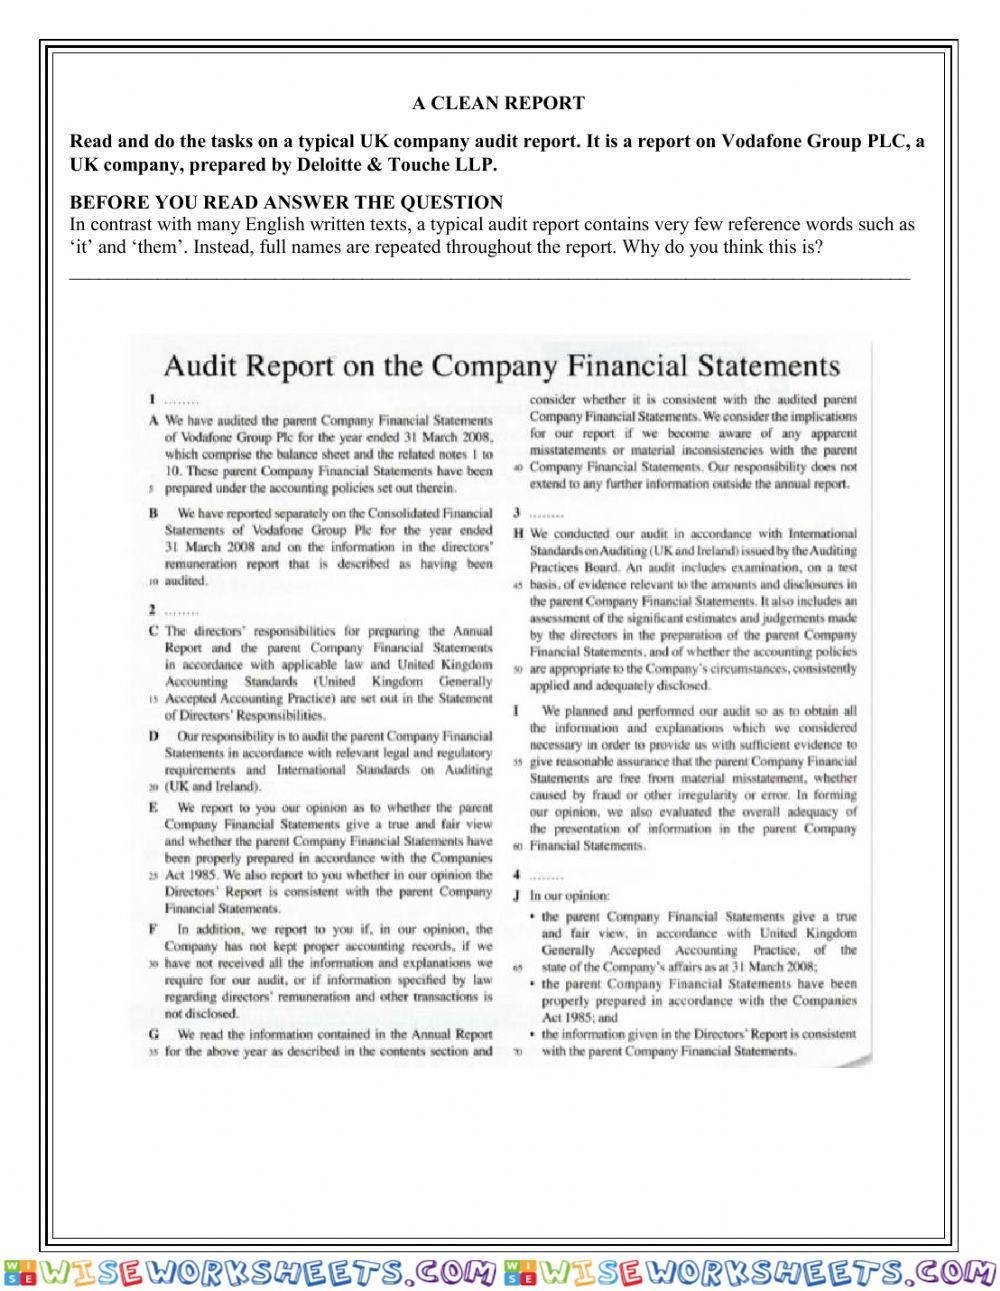 A clean audit report